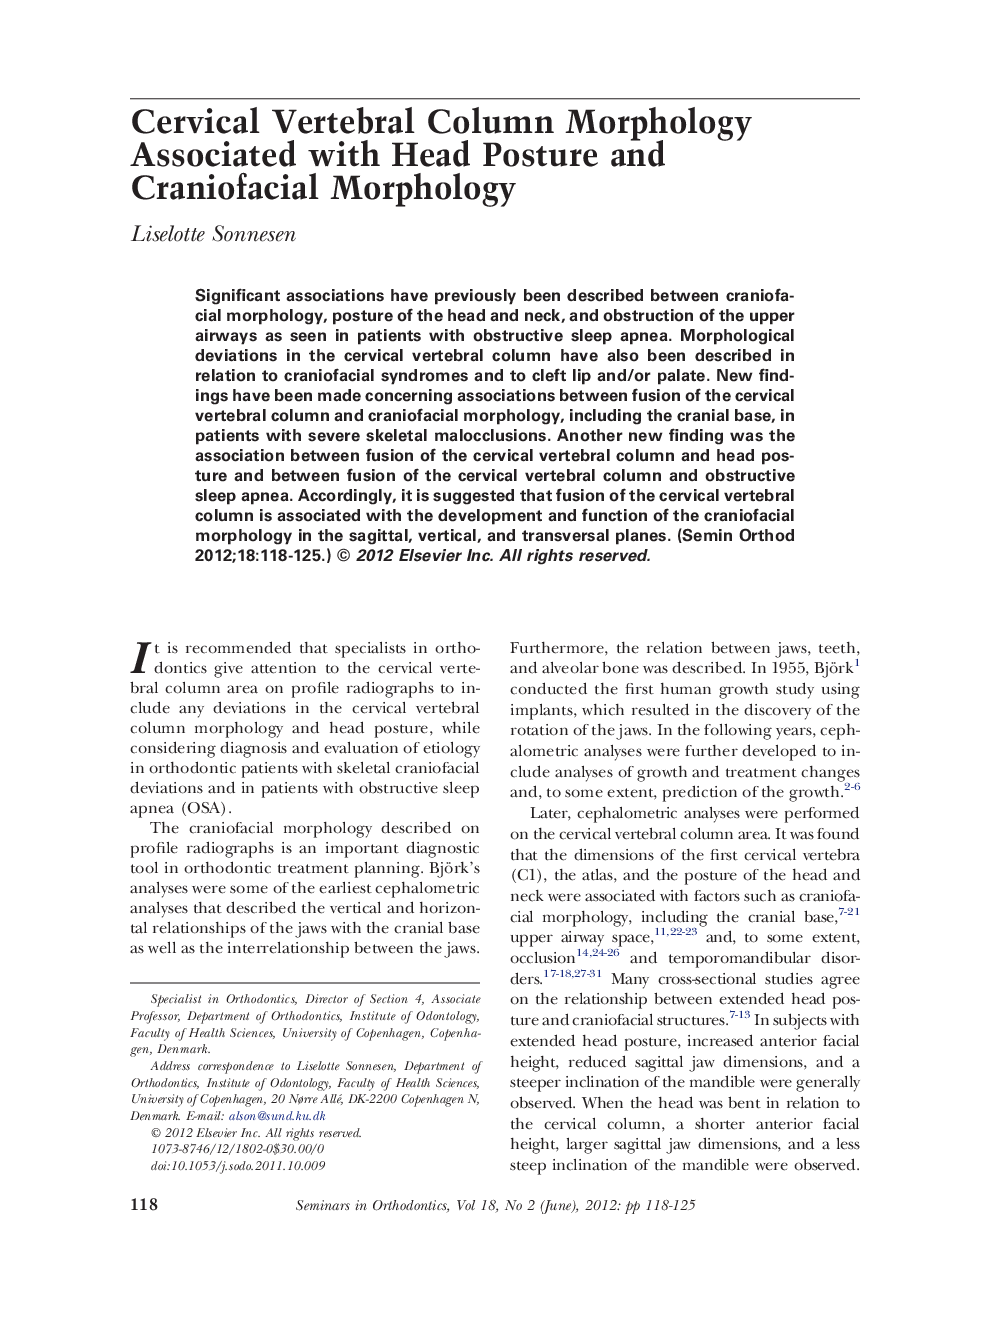 Cervical Vertebral Column Morphology Associated with Head Posture and Craniofacial Morphology